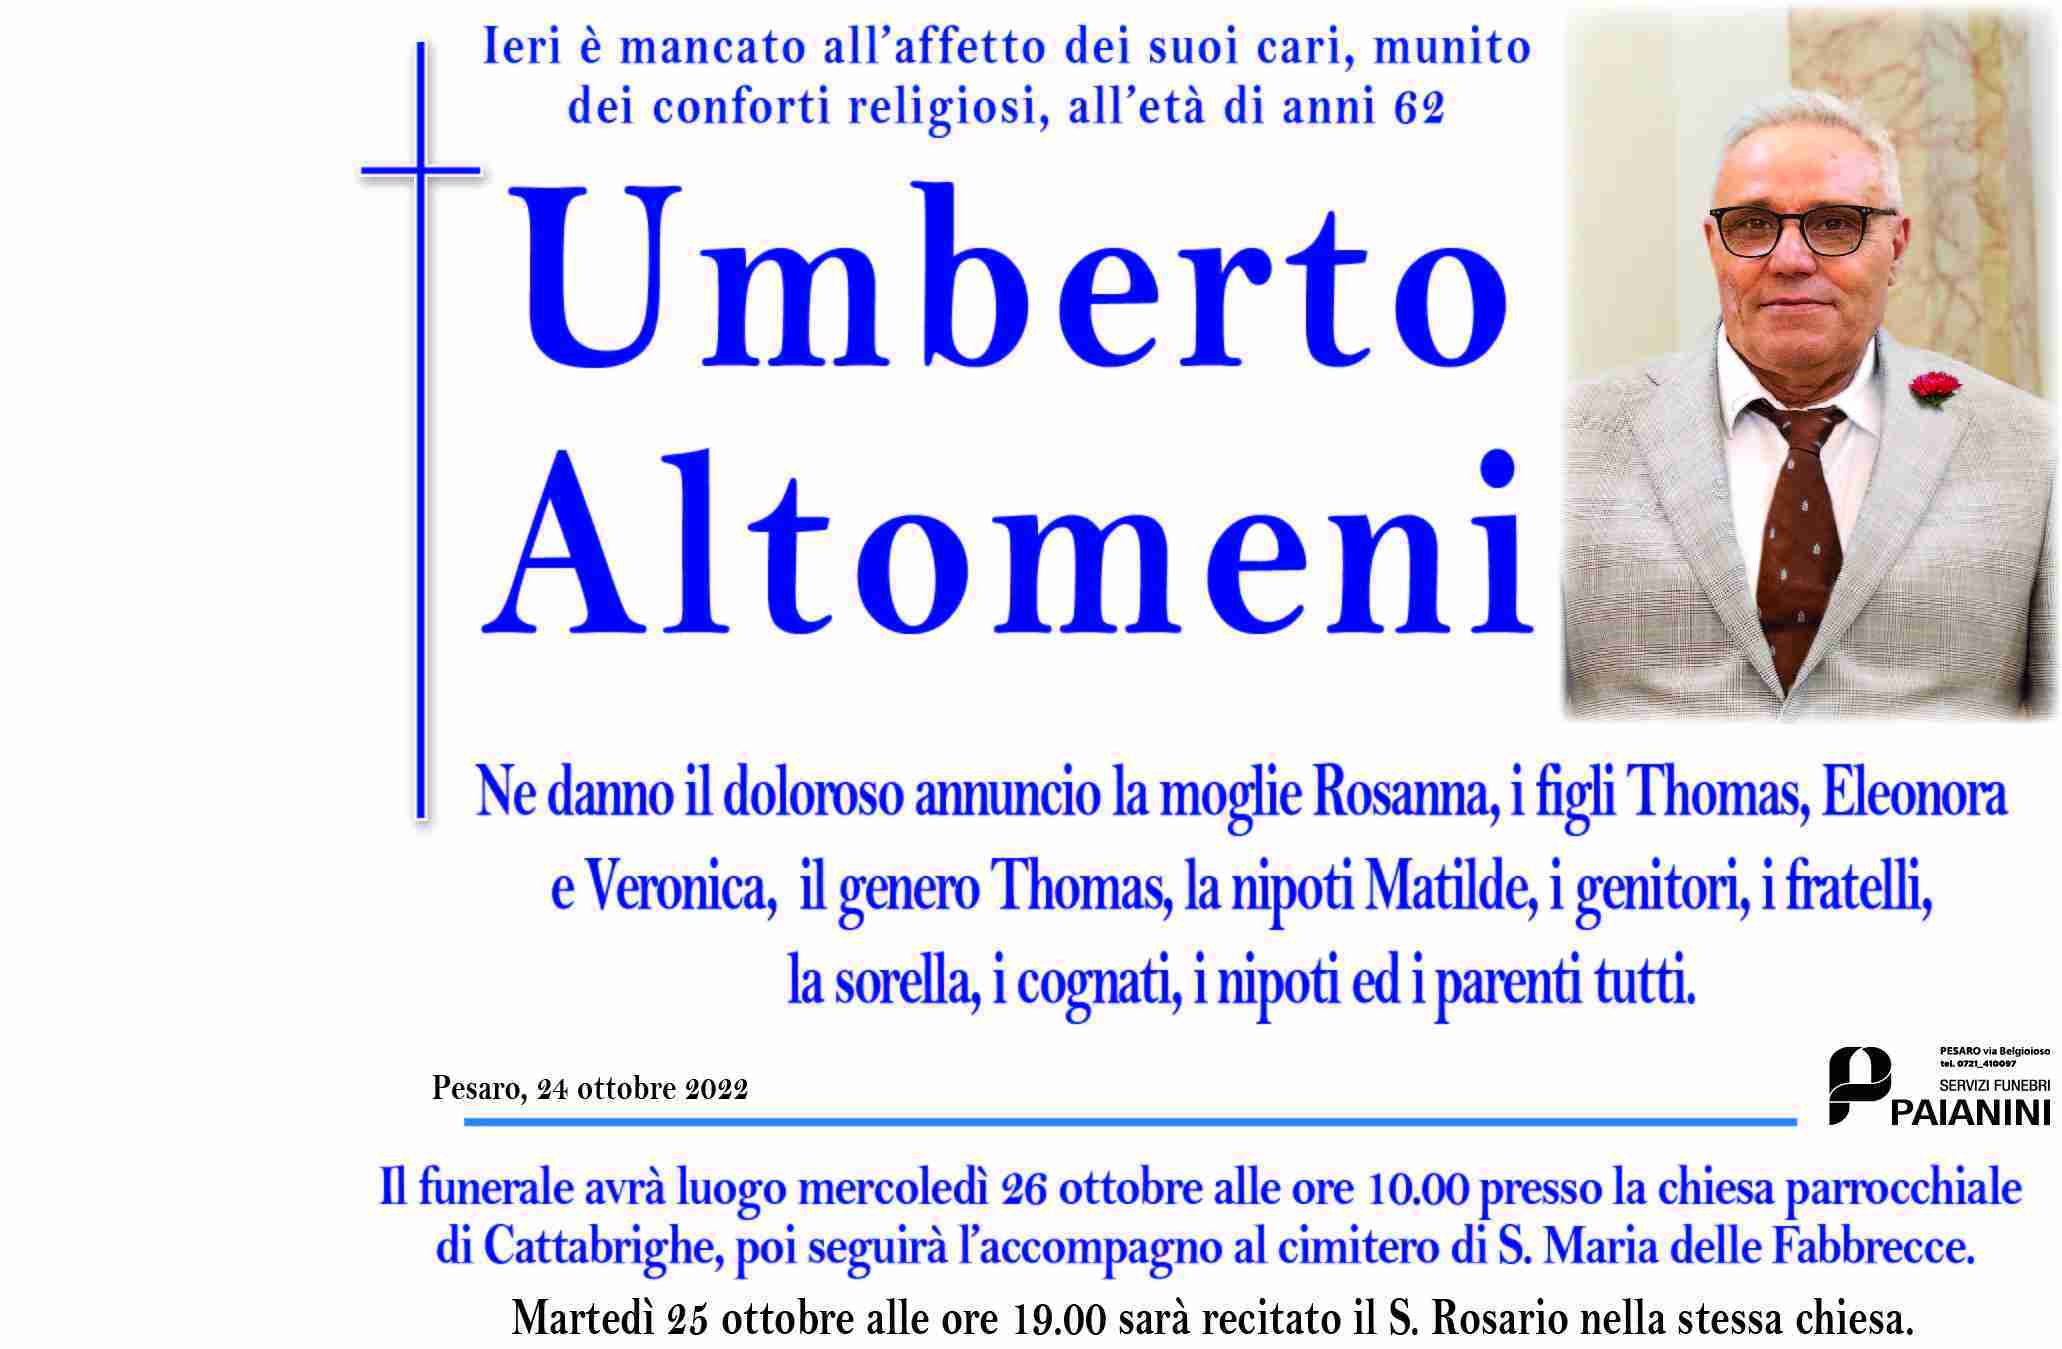 Umberto Altomeni